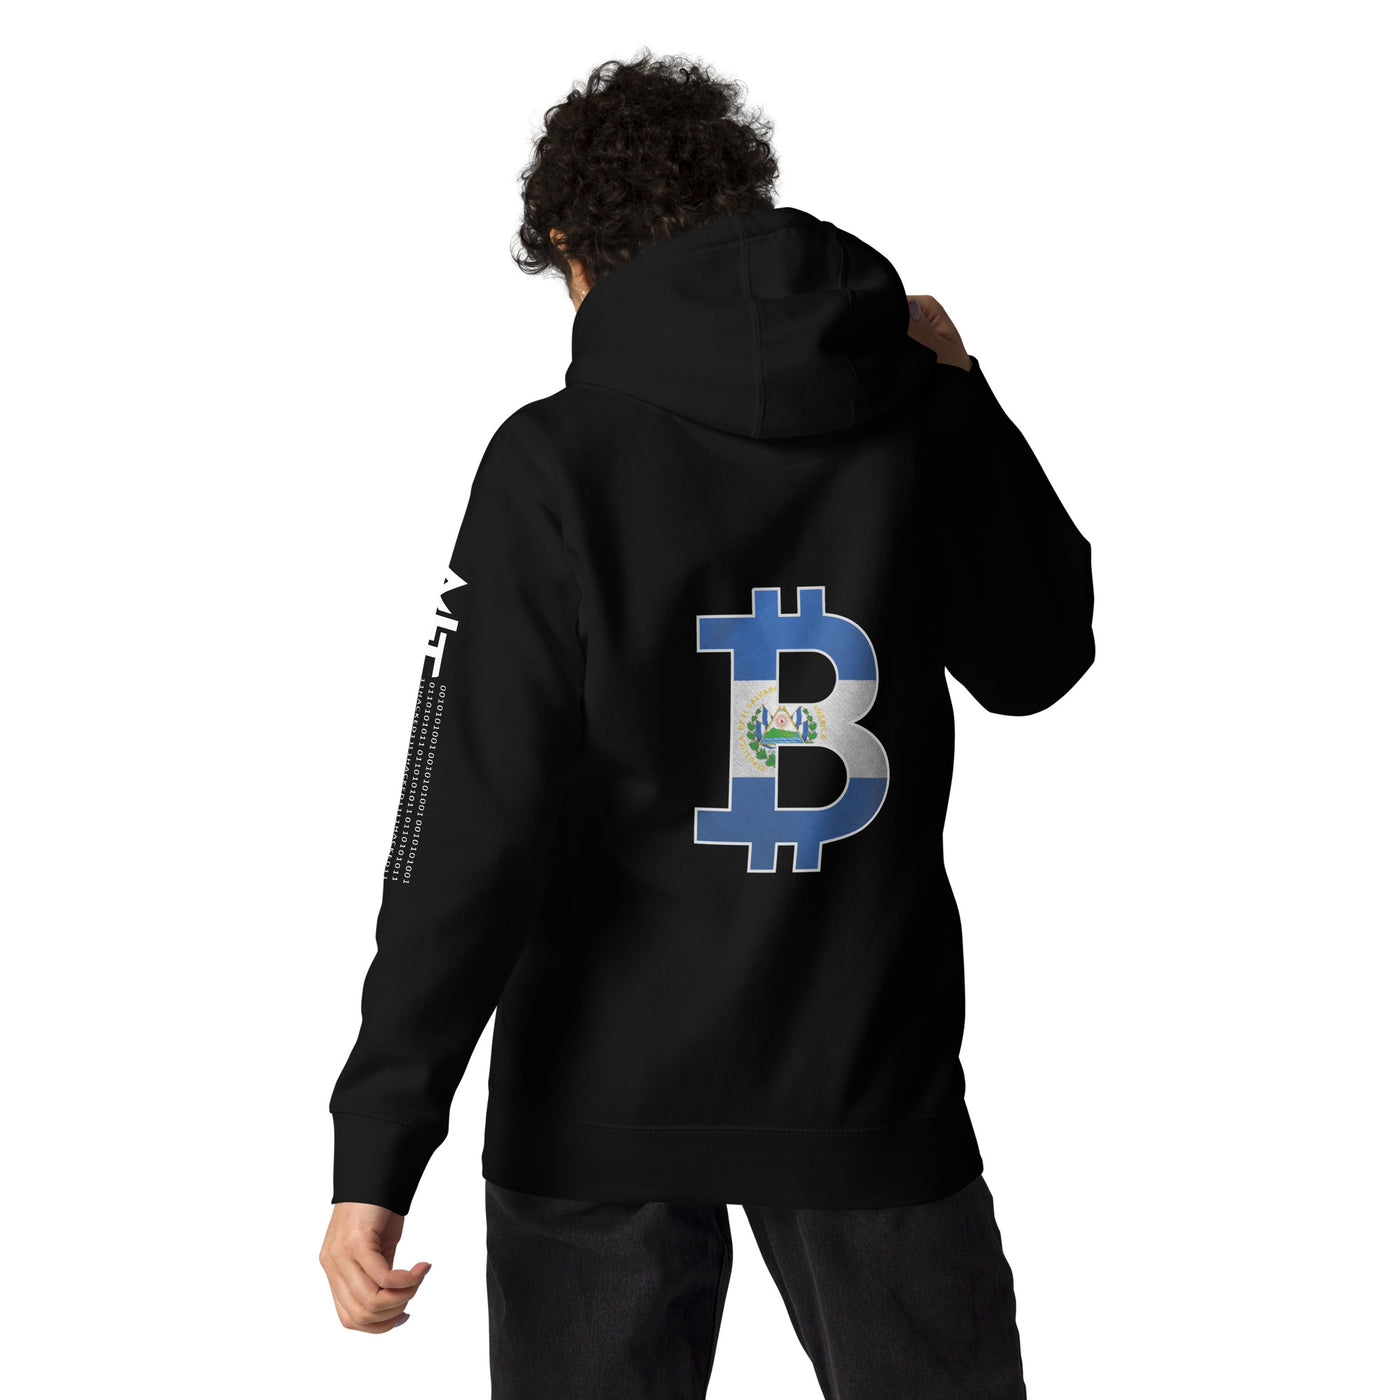 Blue Flag inside Bitcoin - Unisex Hoodie